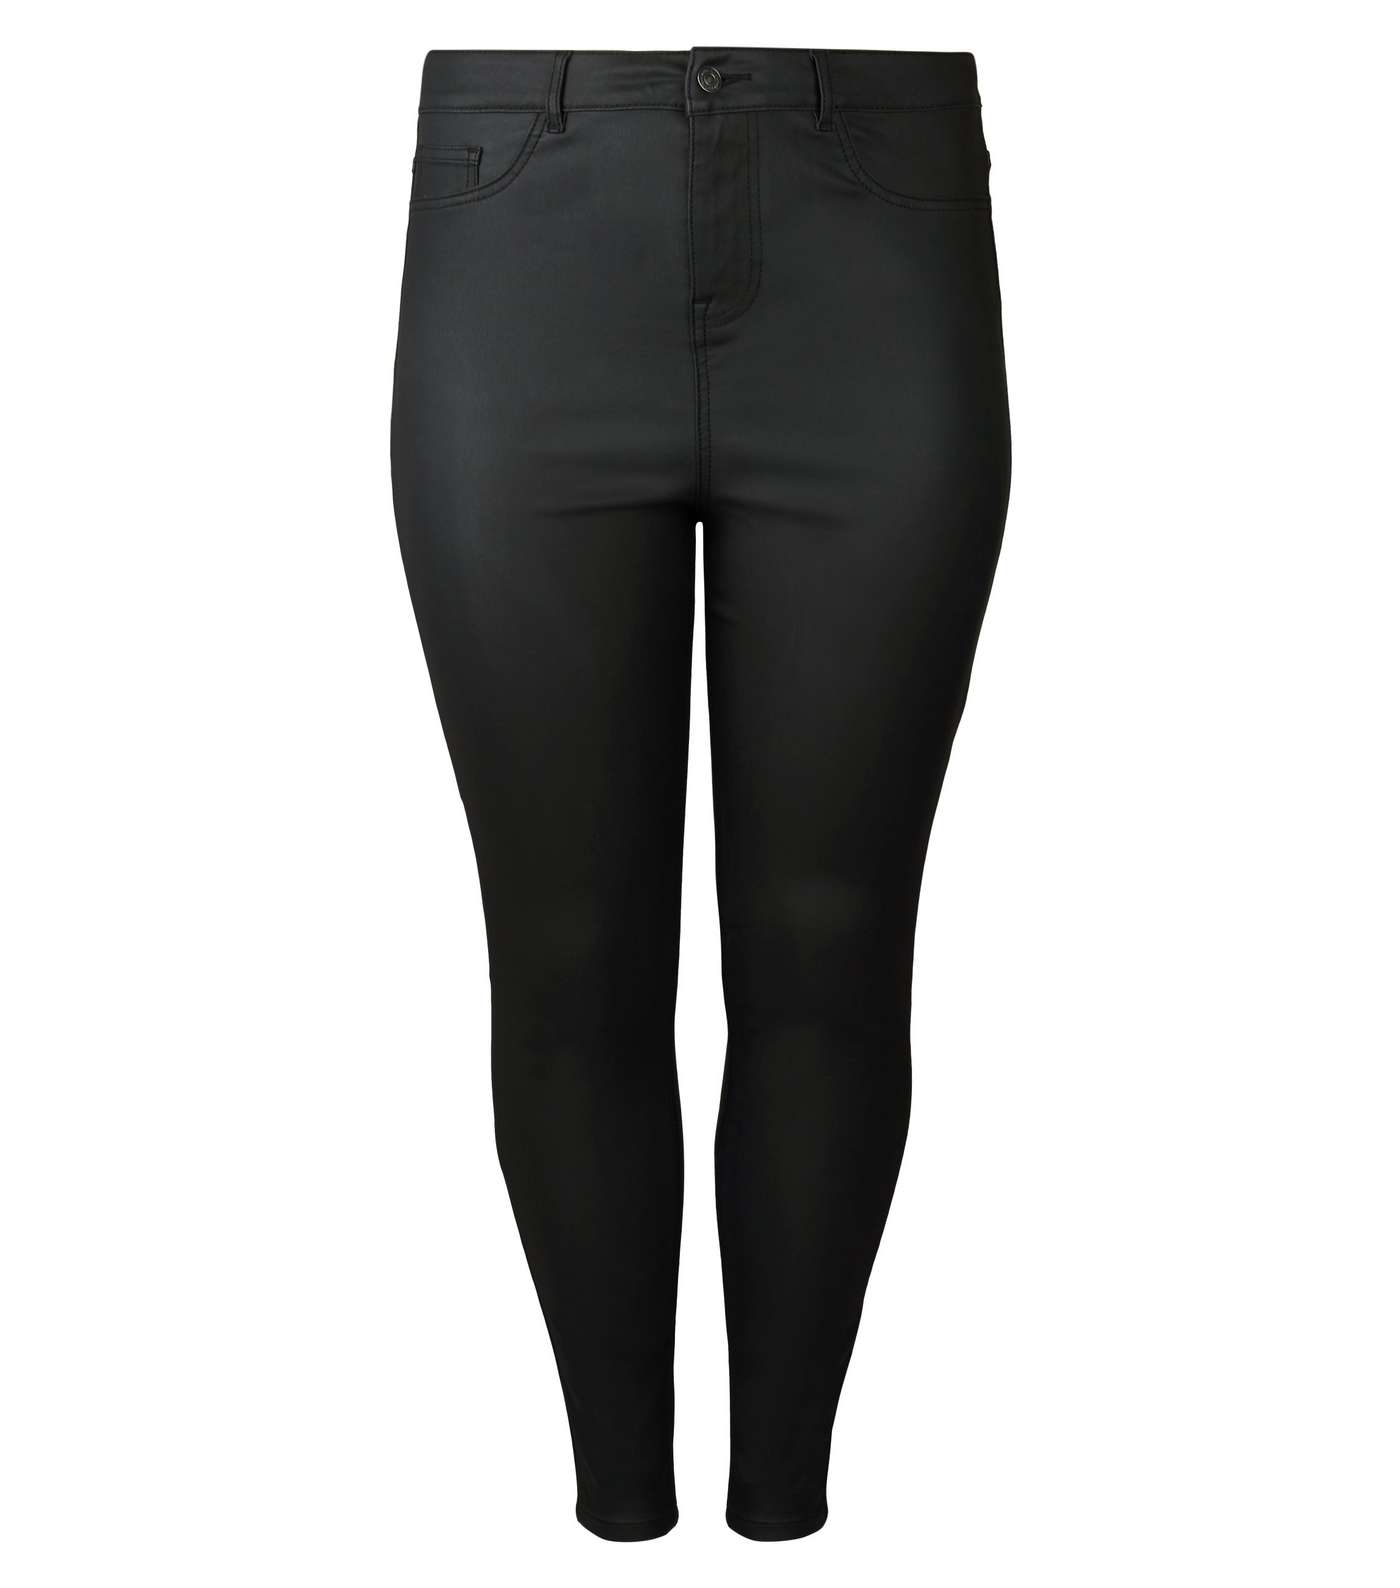 Curves Black Leather-Look High Waist Skinny Jeans Image 4